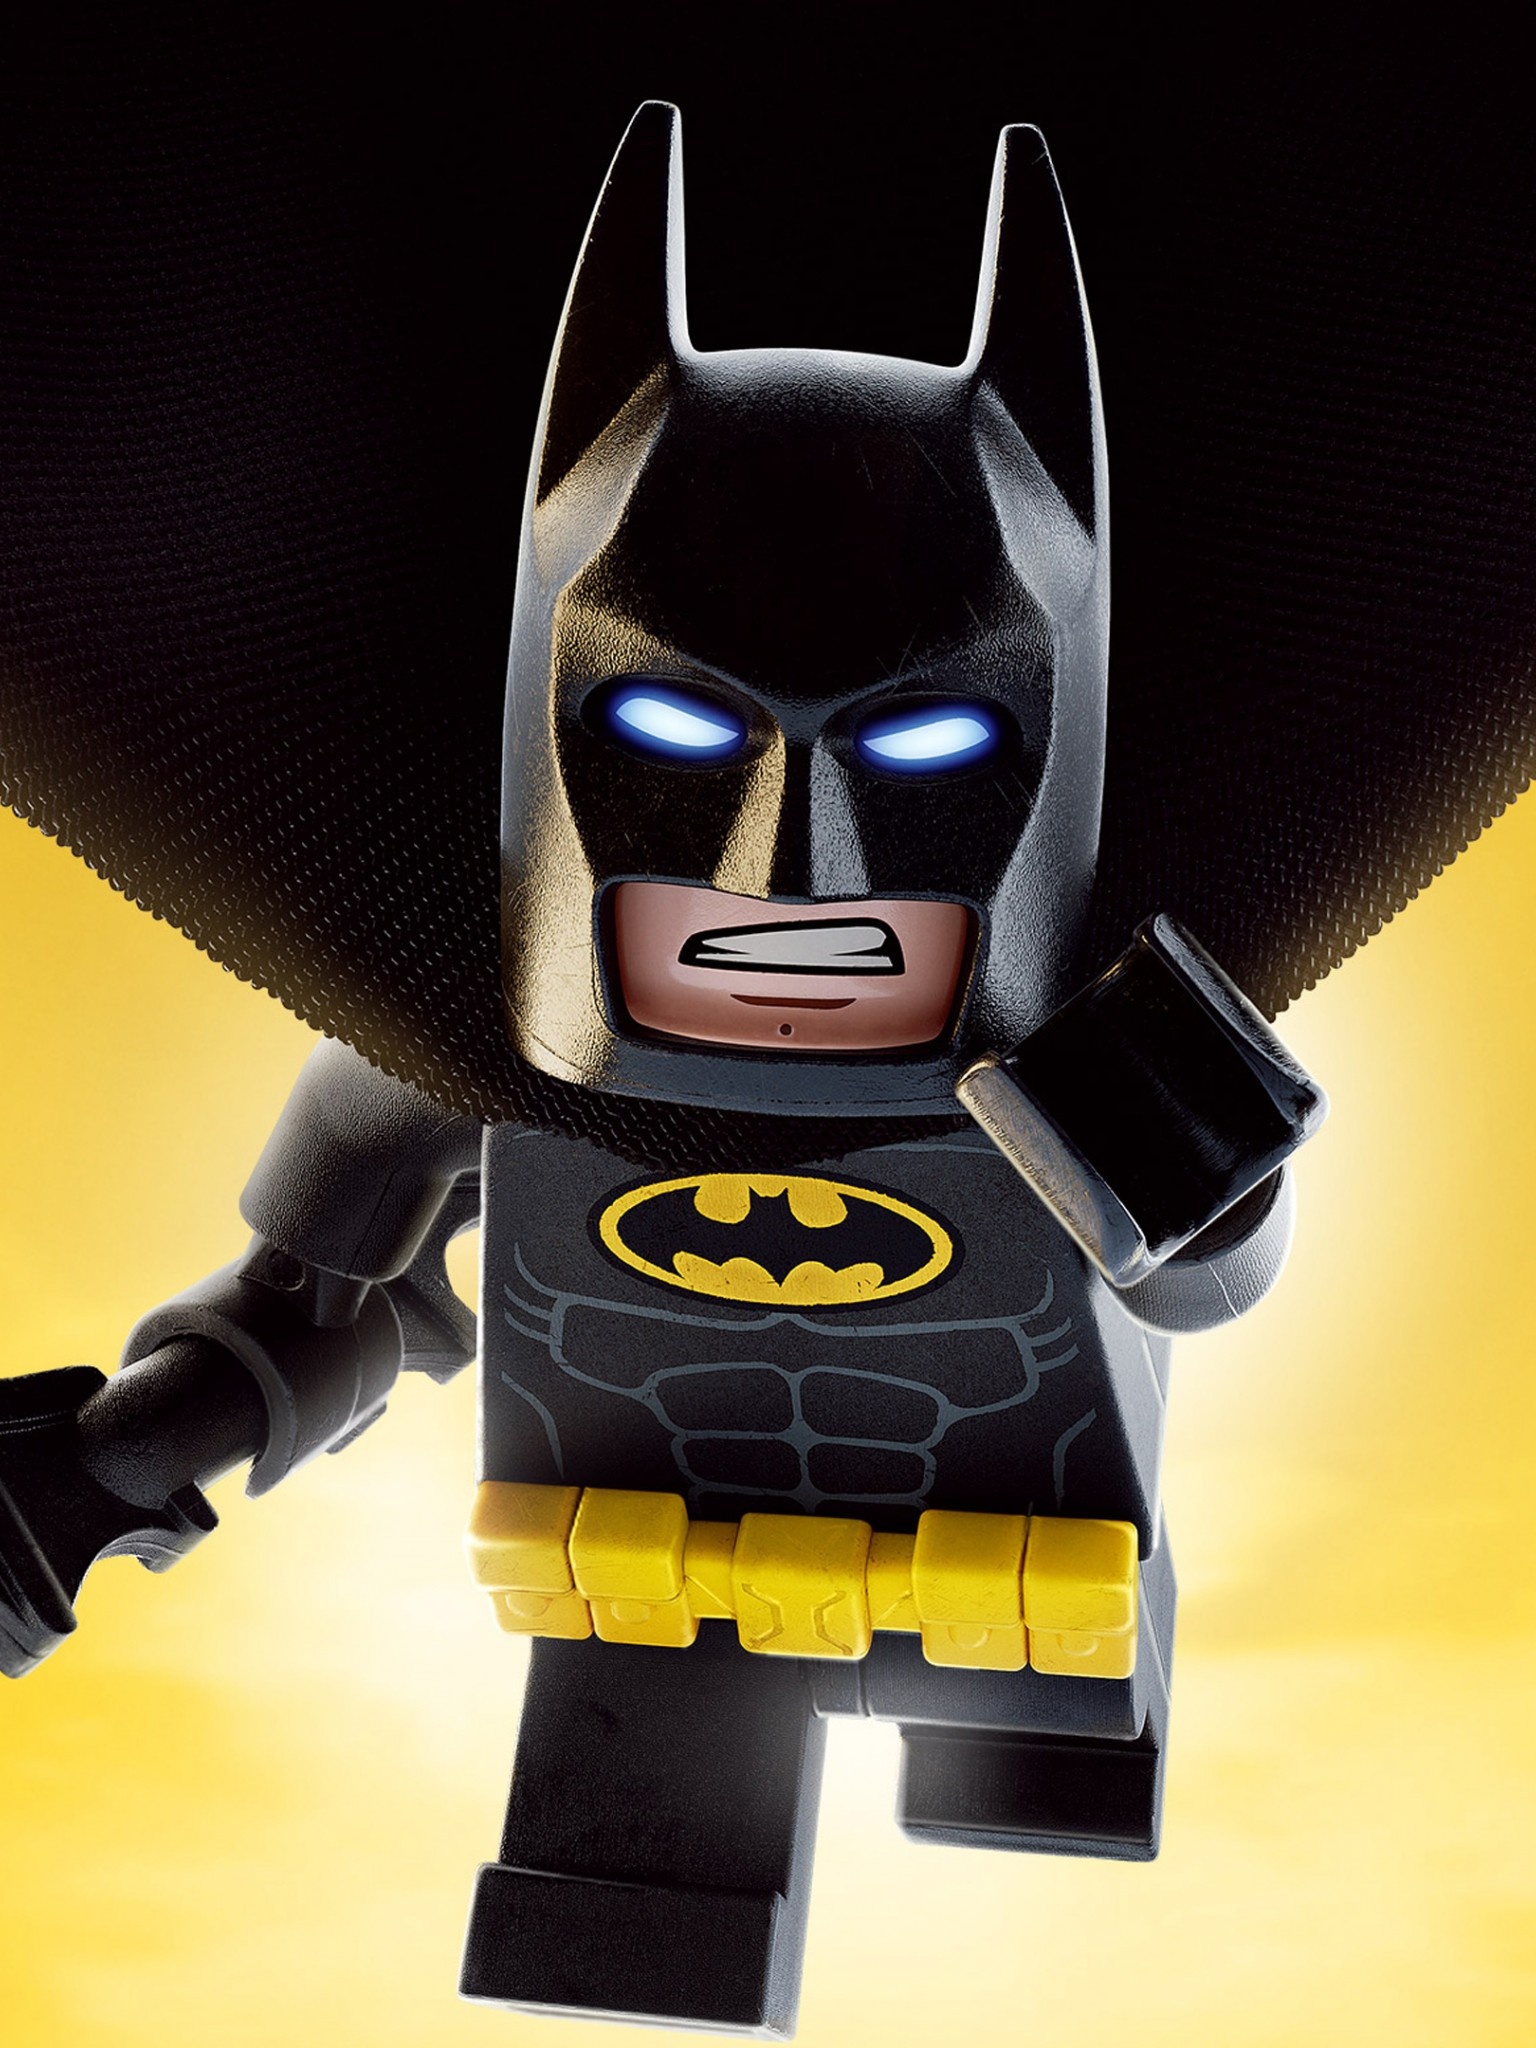 Lego Batman Movie wallpaper, Desktop and mobile download, Retina iPad HD, Stunning art, 1540x2050 HD Phone